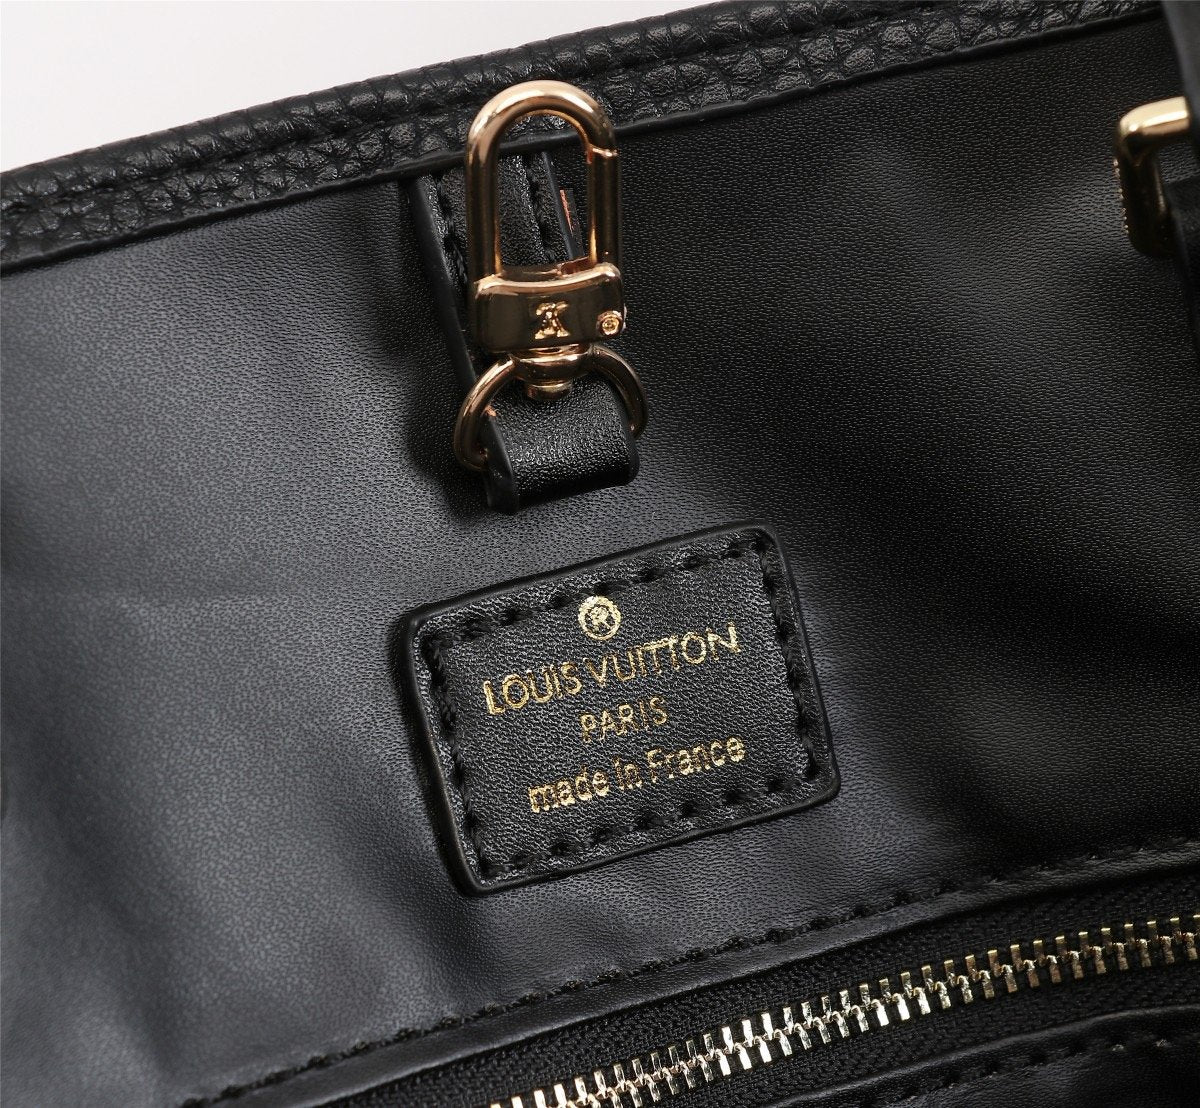 EI - Top Handbags LUV 296